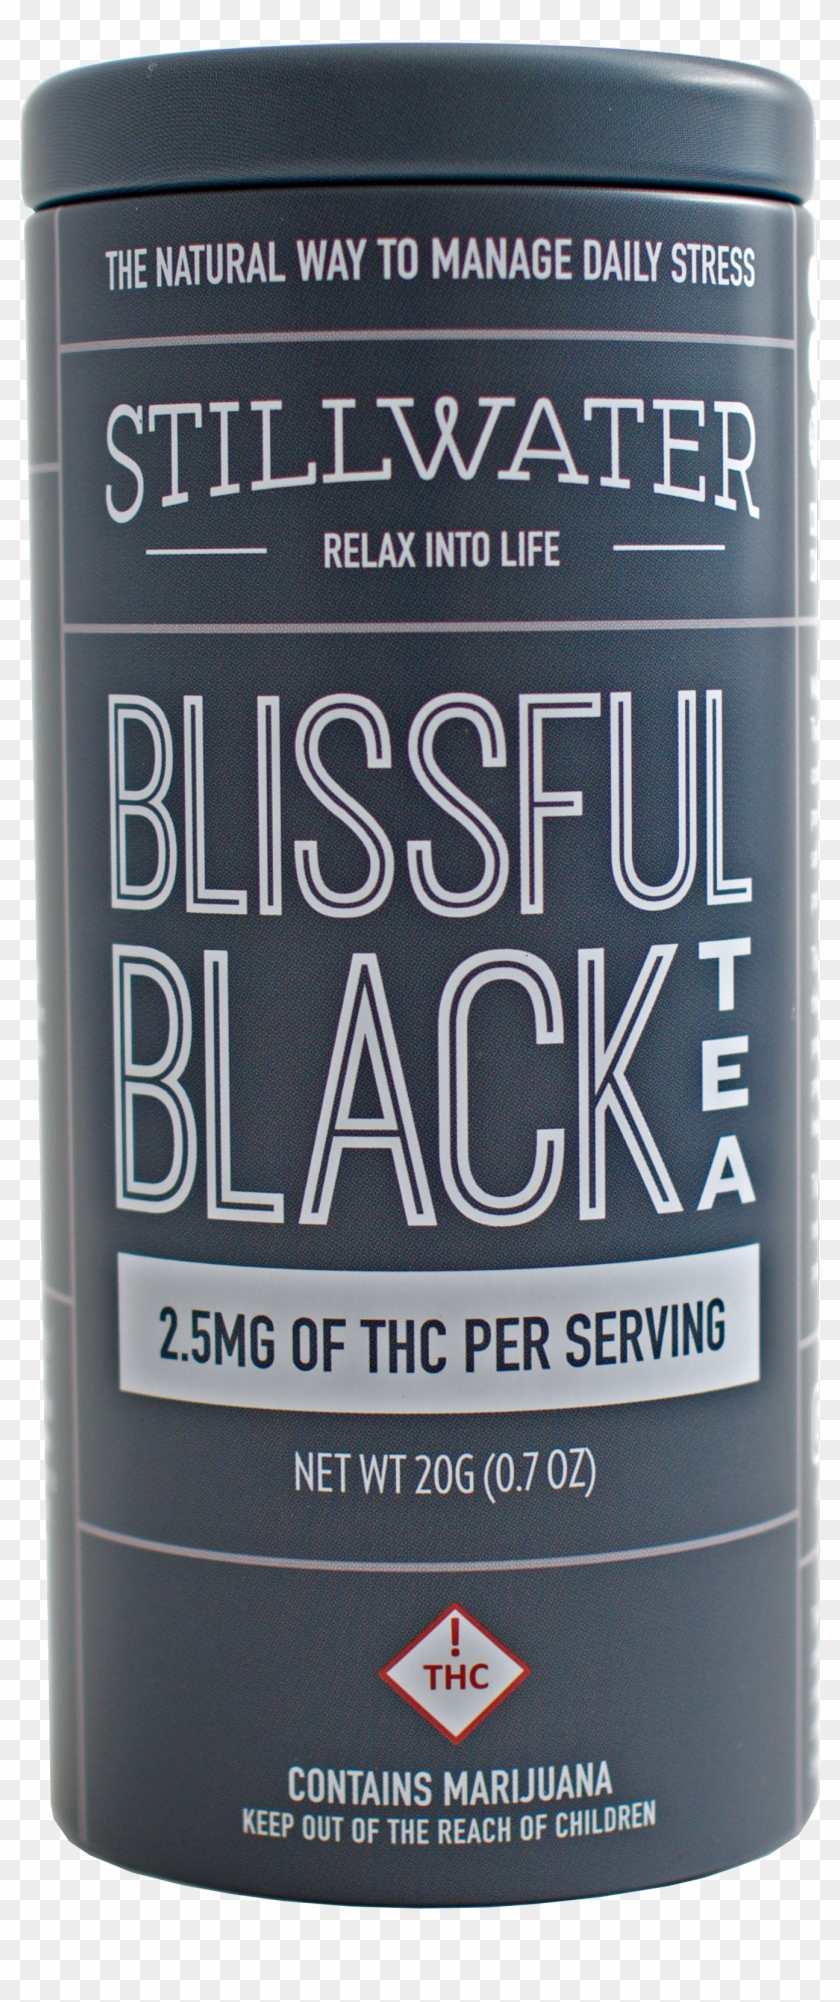 Blissful Black Stillwater Tea By Stillwater Brands - Energy Drink Clipart #5015001